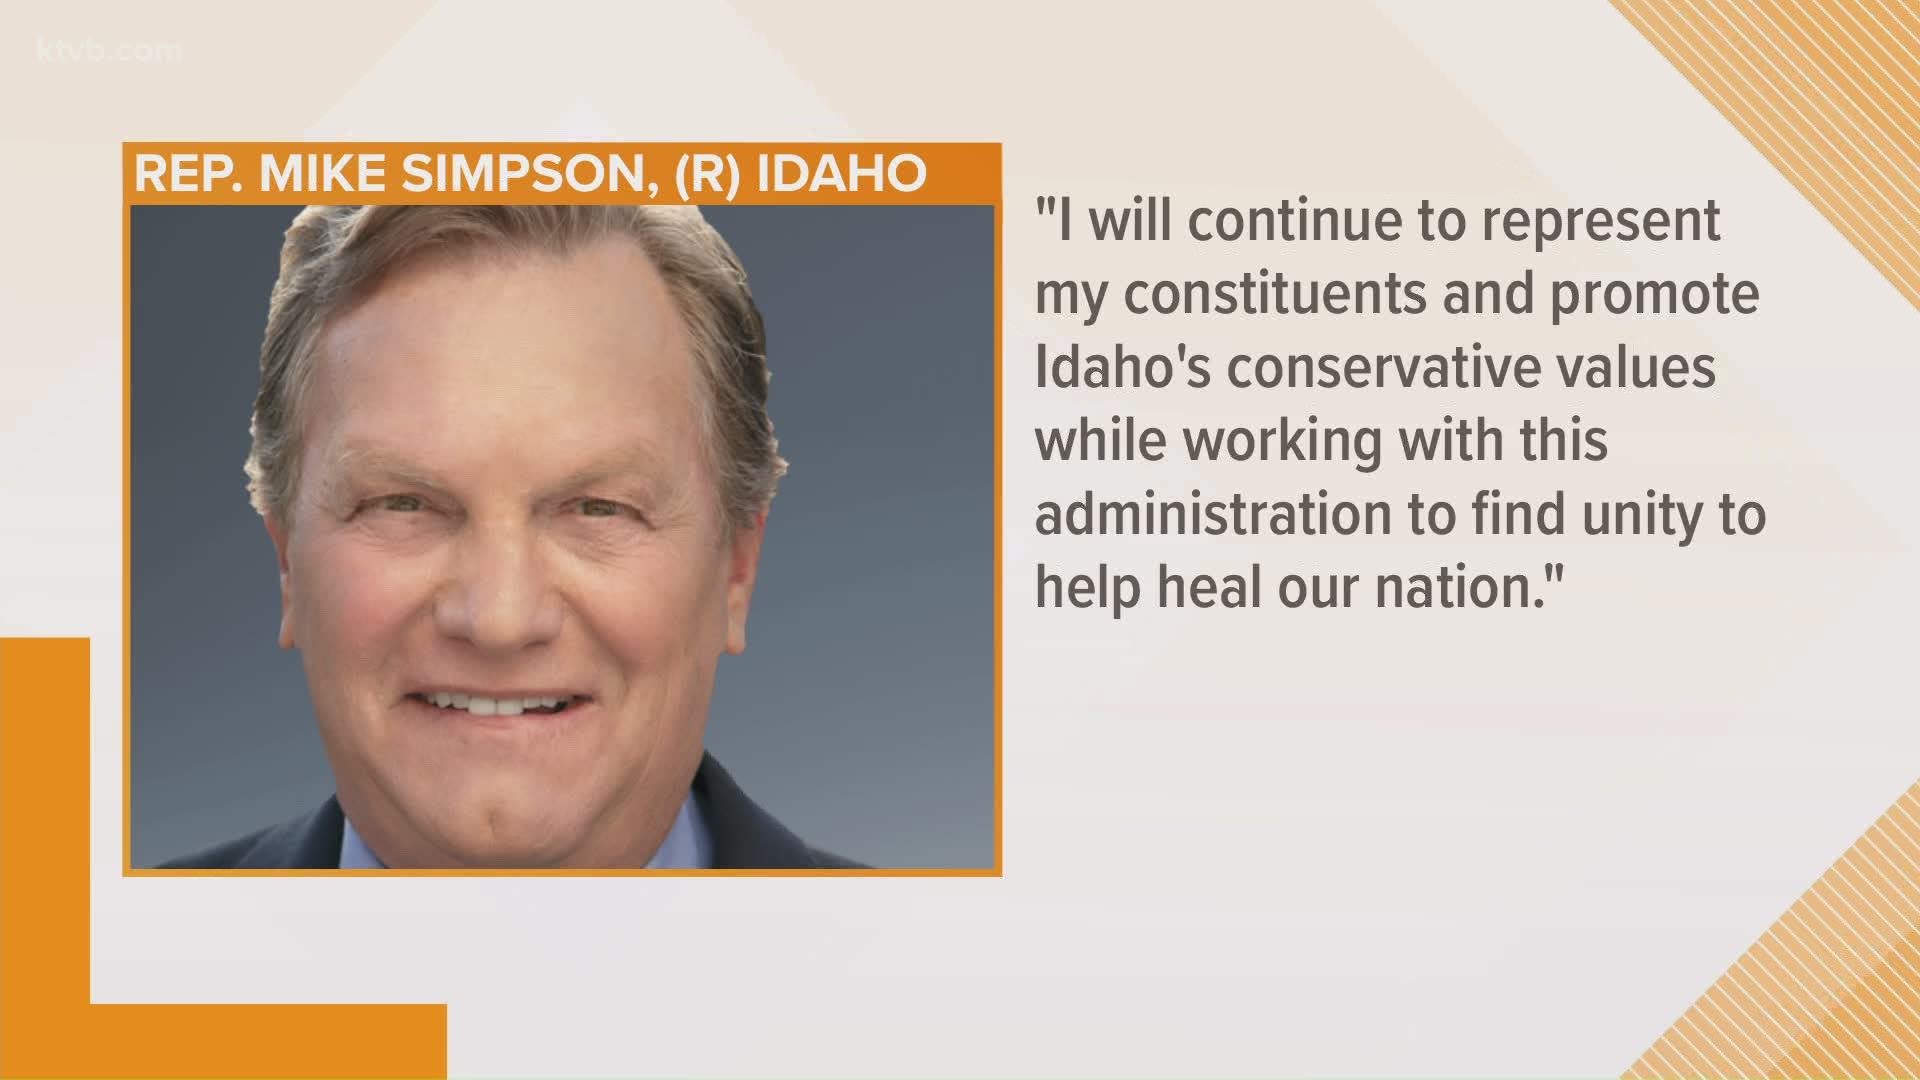 Idaho's senators and representatives each released a statement.